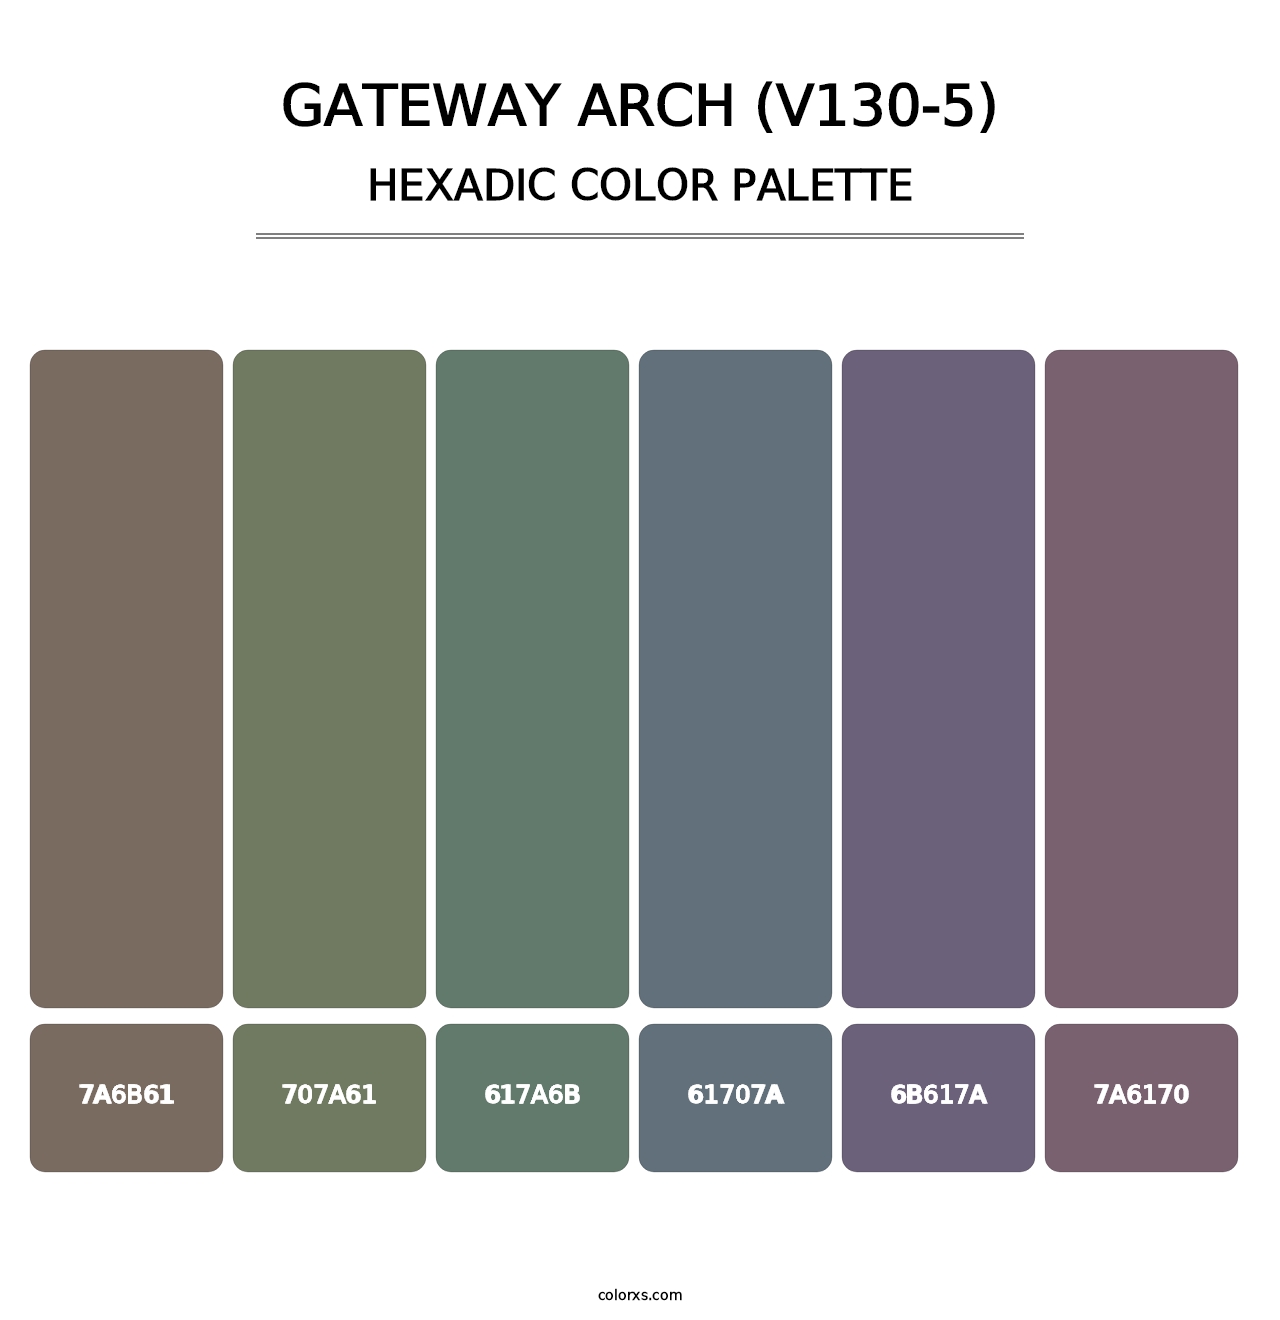 Gateway Arch (V130-5) - Hexadic Color Palette